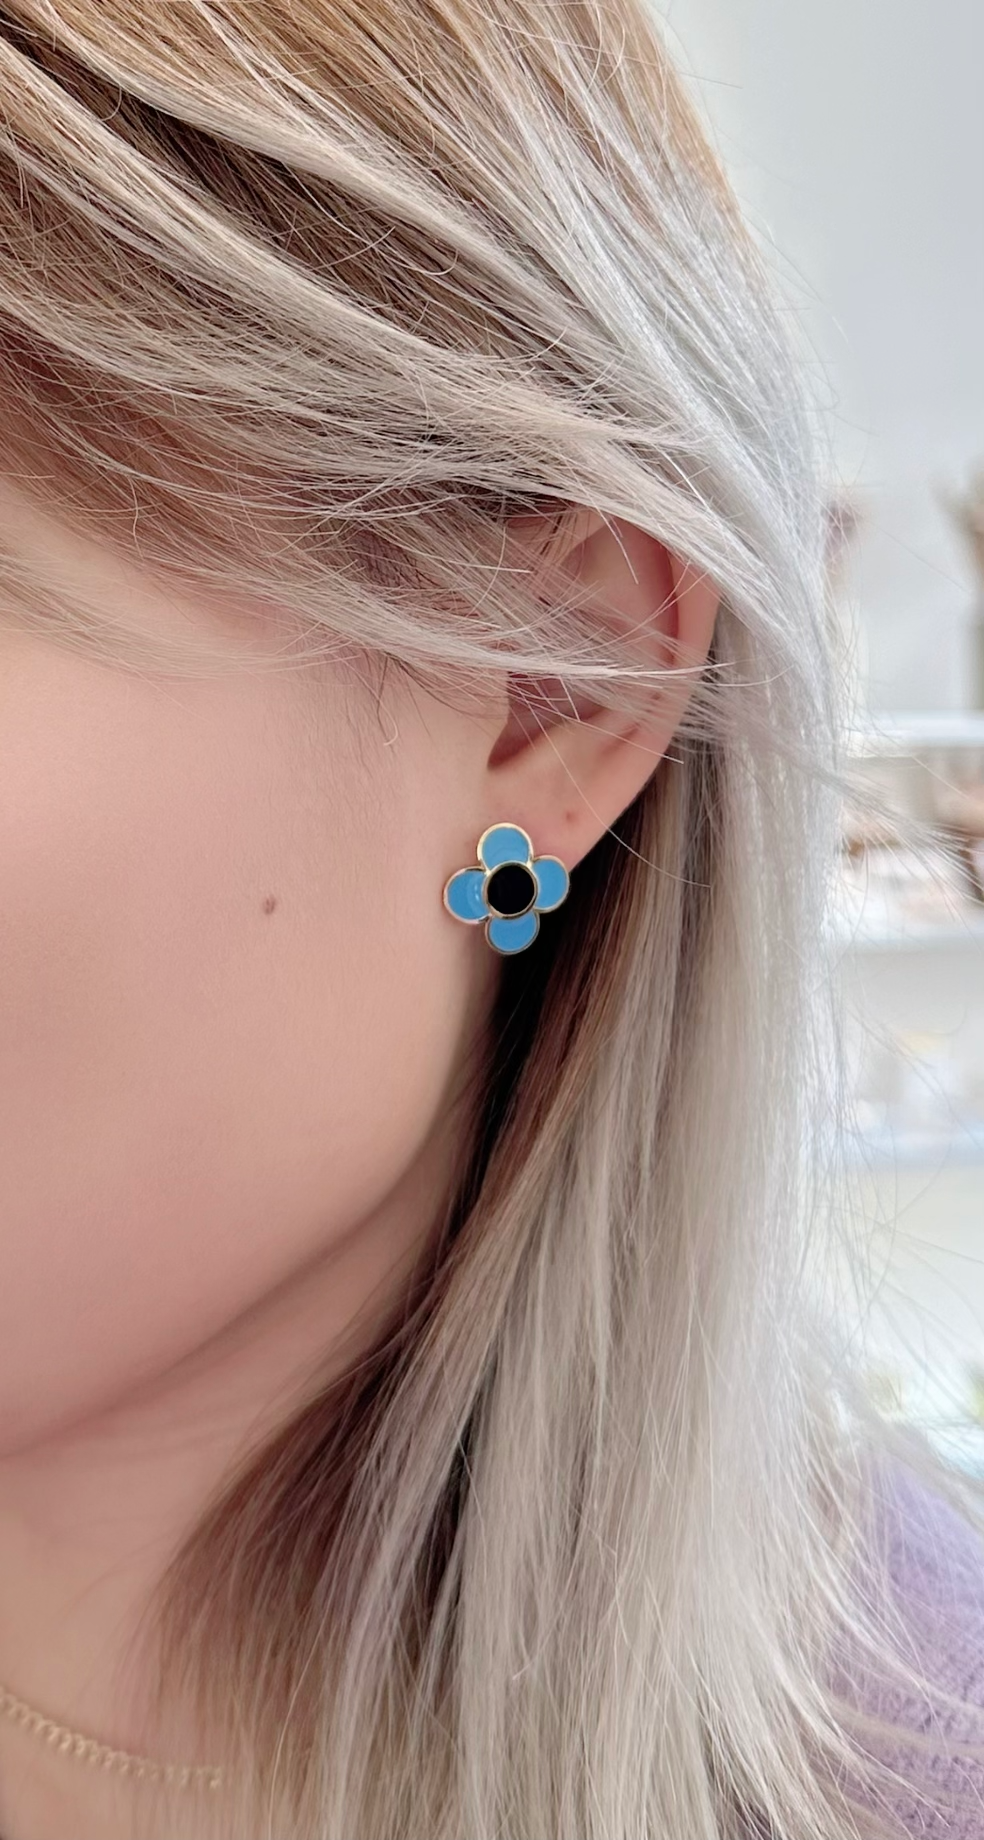 Daisy Flower Blue and Black Enamel Stud Earring